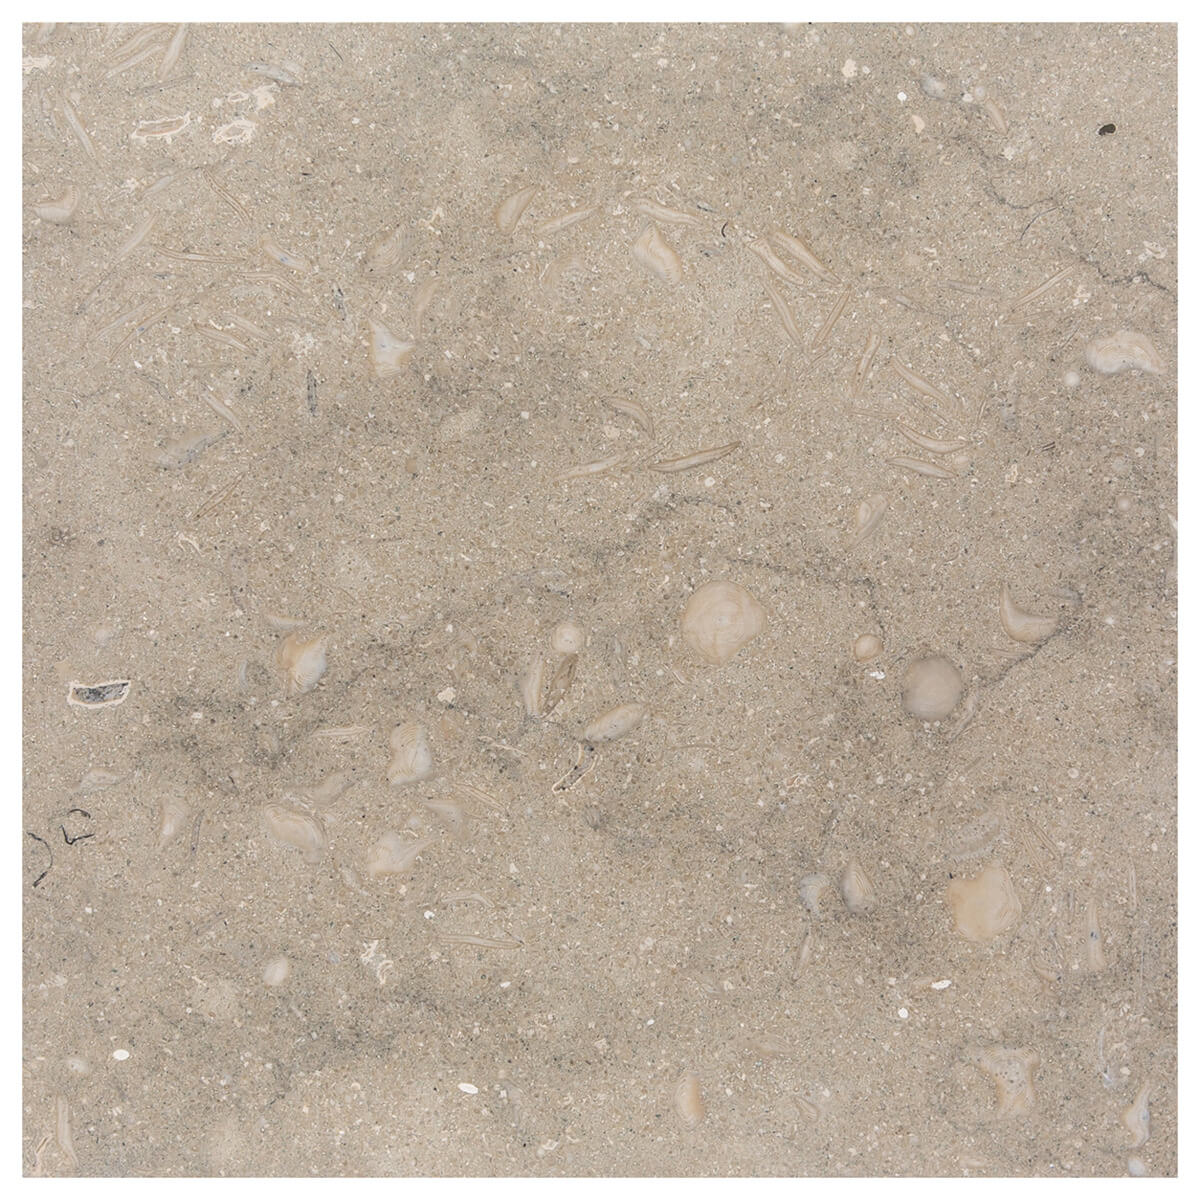 haussmann pistache seagrass limestone square natural stone field tile 18x18 honed